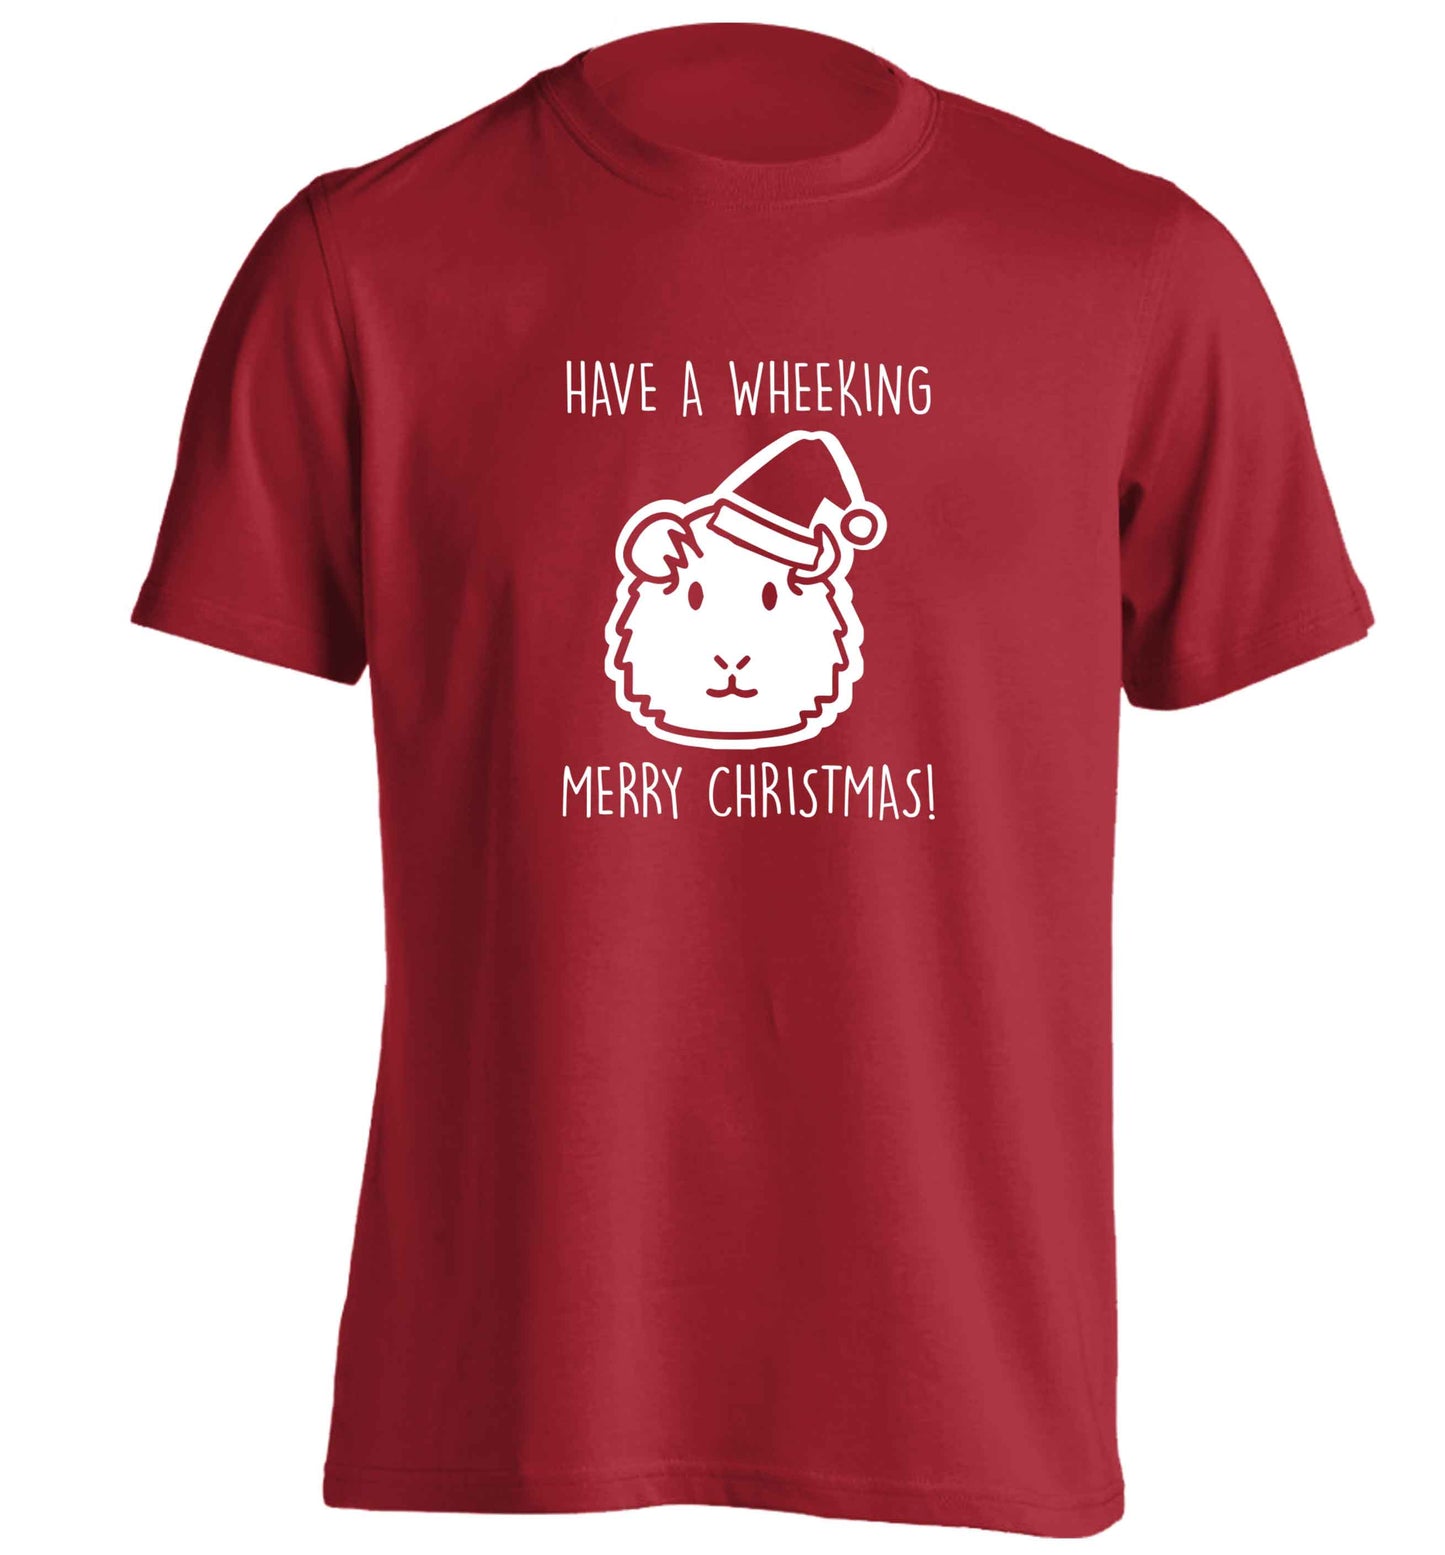 Have a wheeking merry Christmas adults unisex red Tshirt 2XL